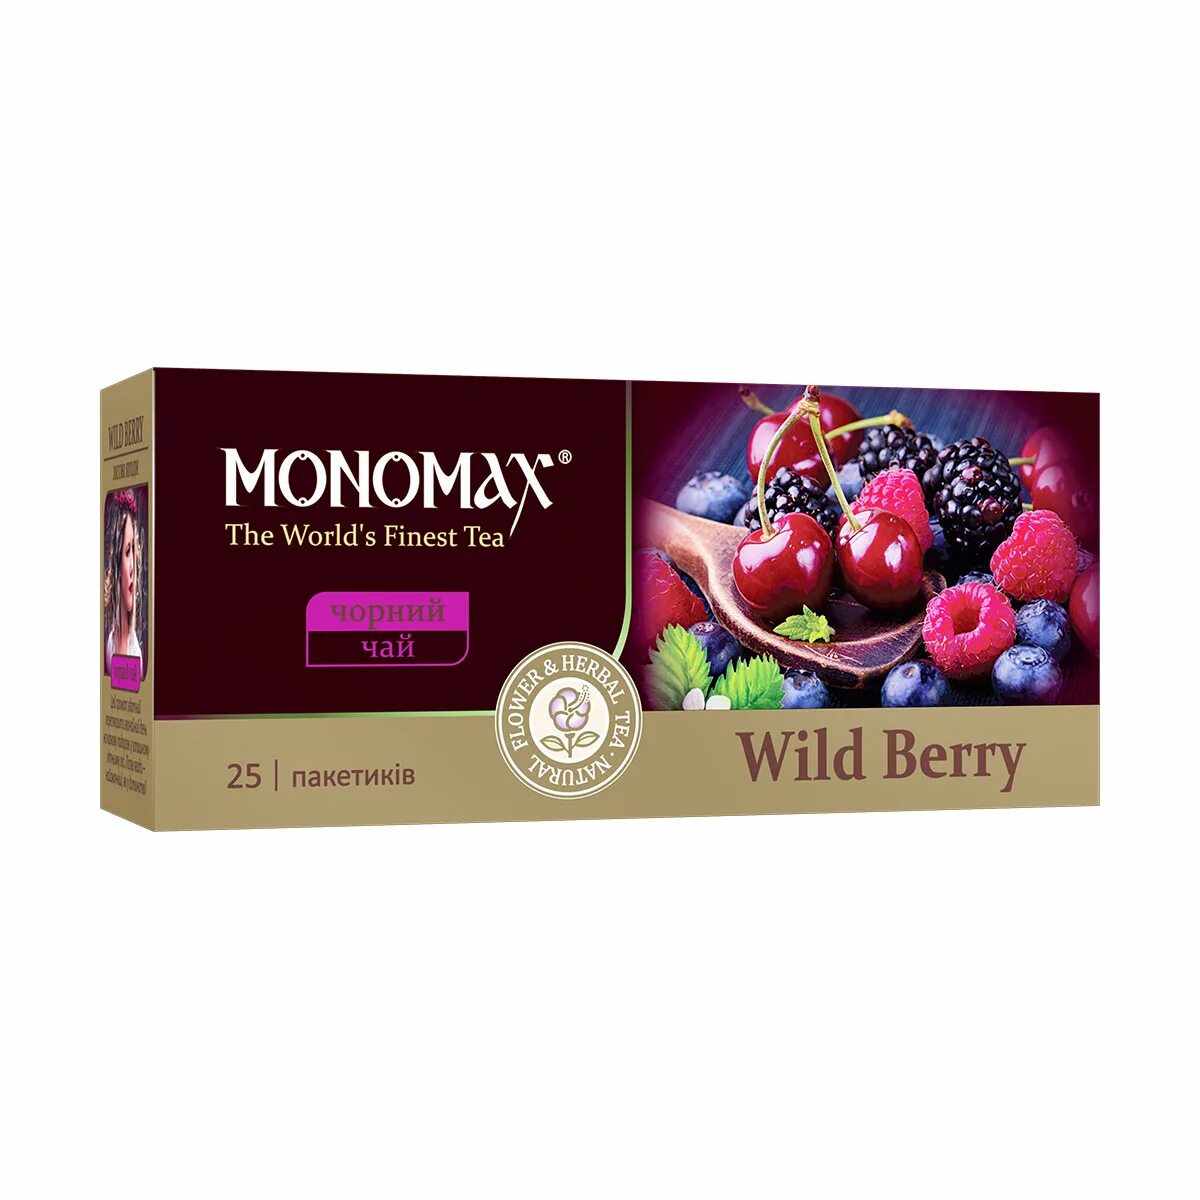 Купить чай на wildberries. MONOMAX Wild Berry. Чай Мономах. MONOMAX чай. Wildberry чай.